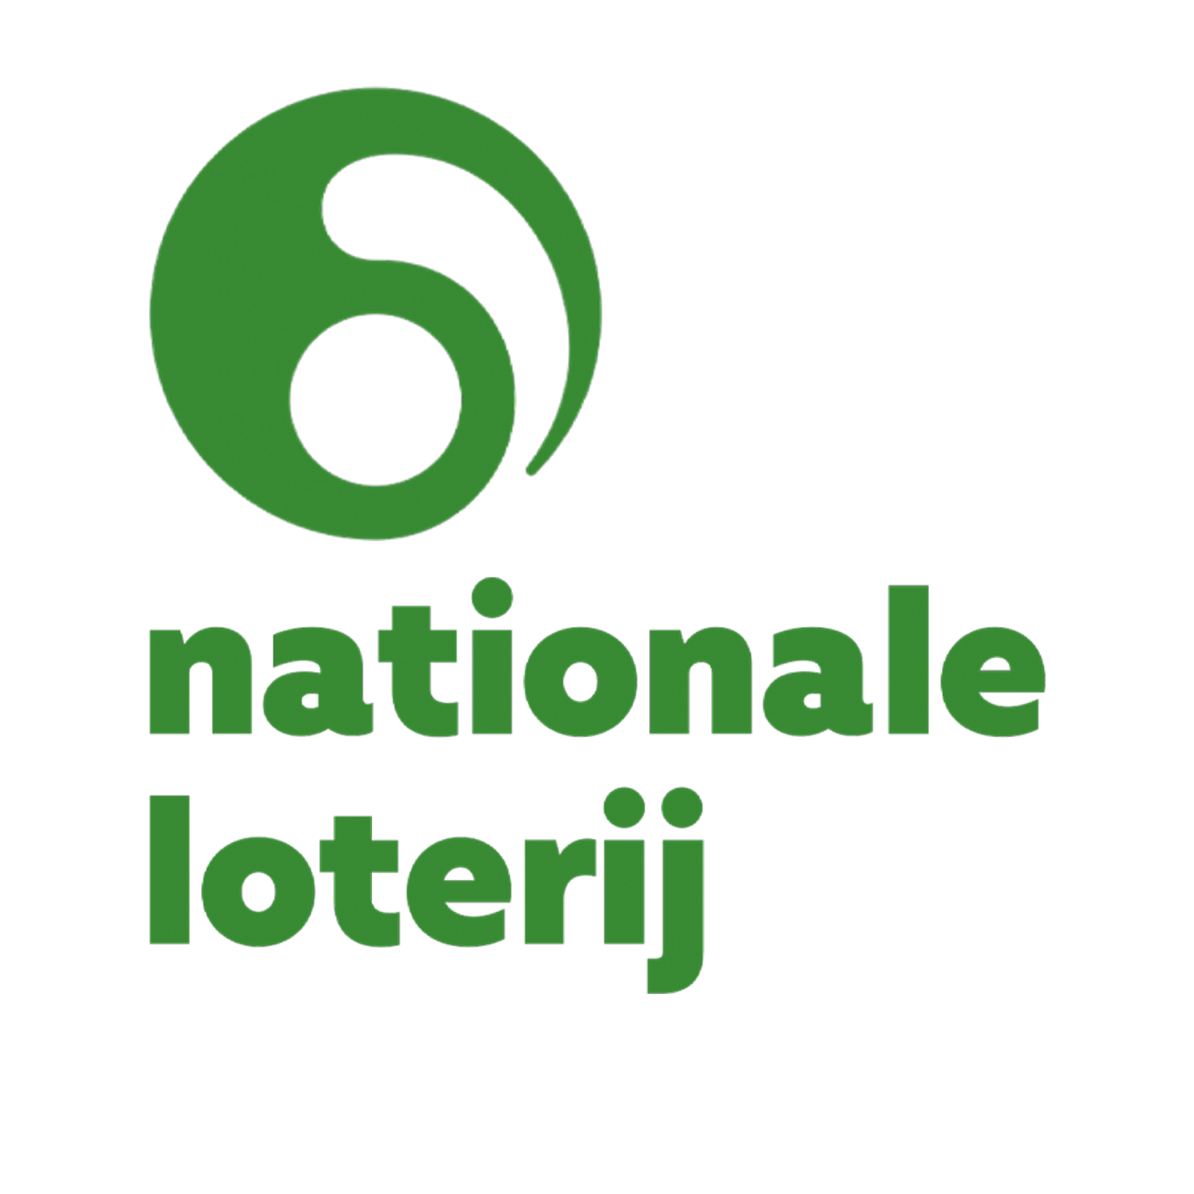 nationale loterij